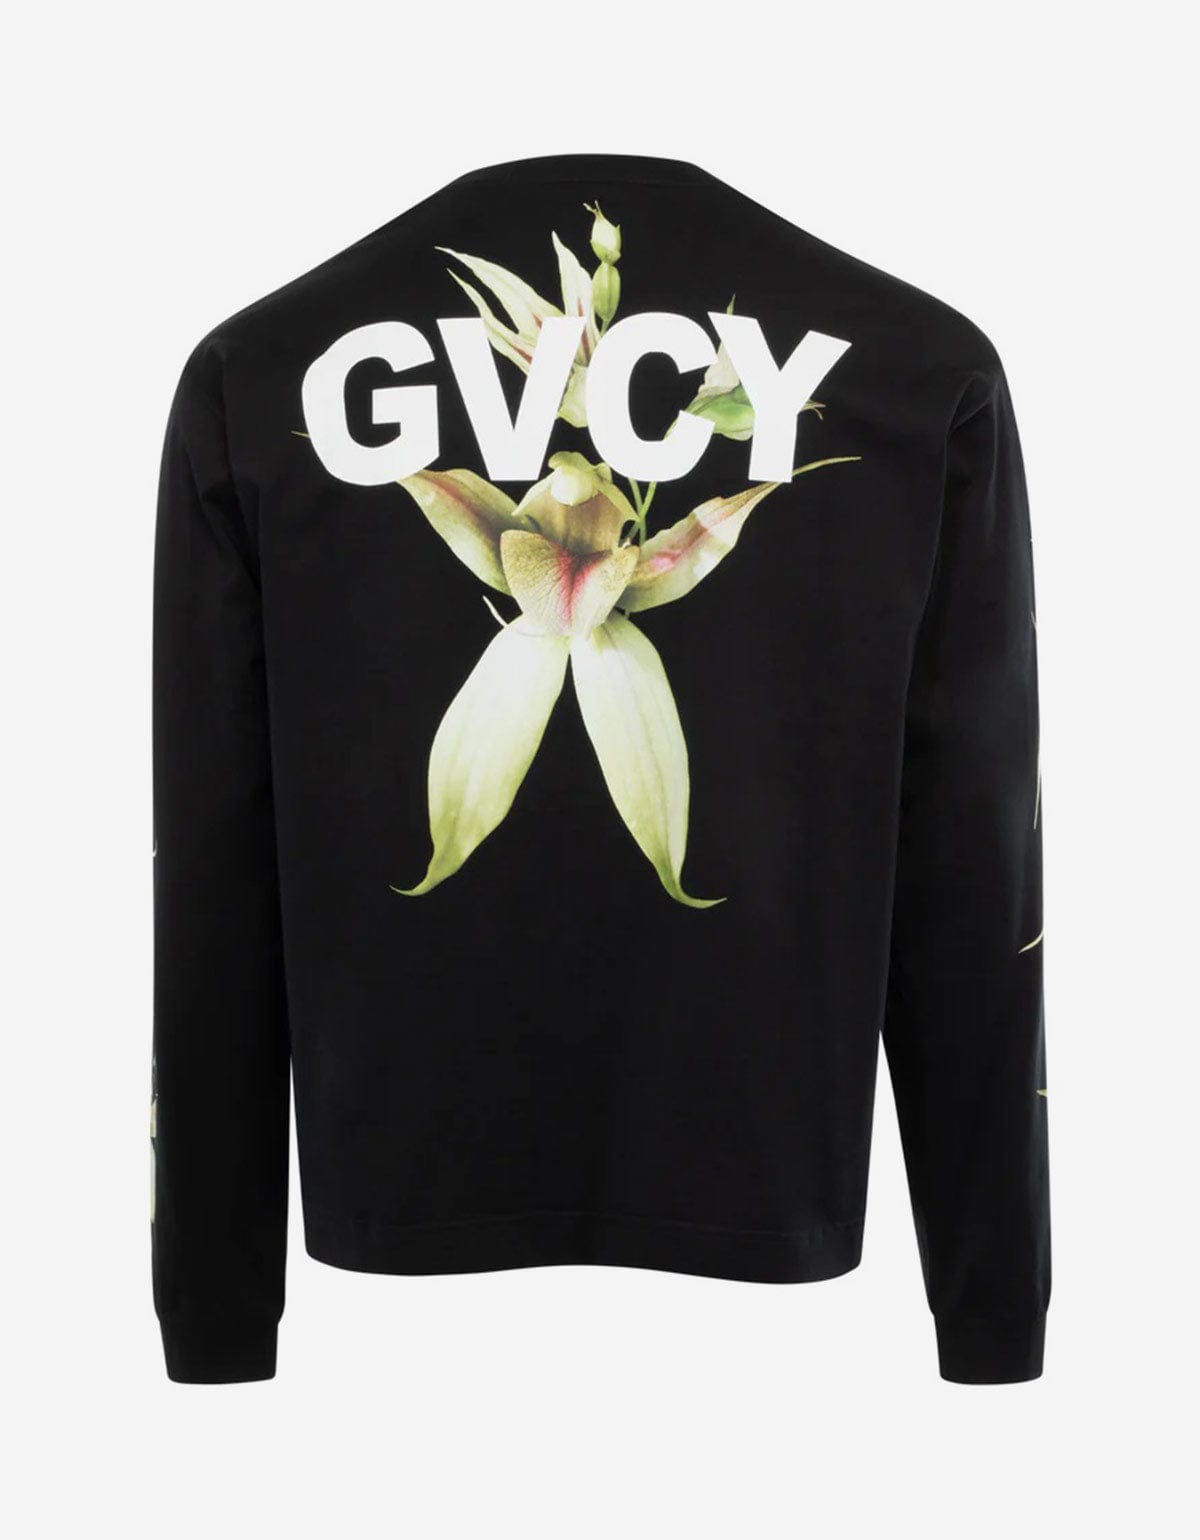 Givenchy Black GVCY Long Sleeve T-Shirt